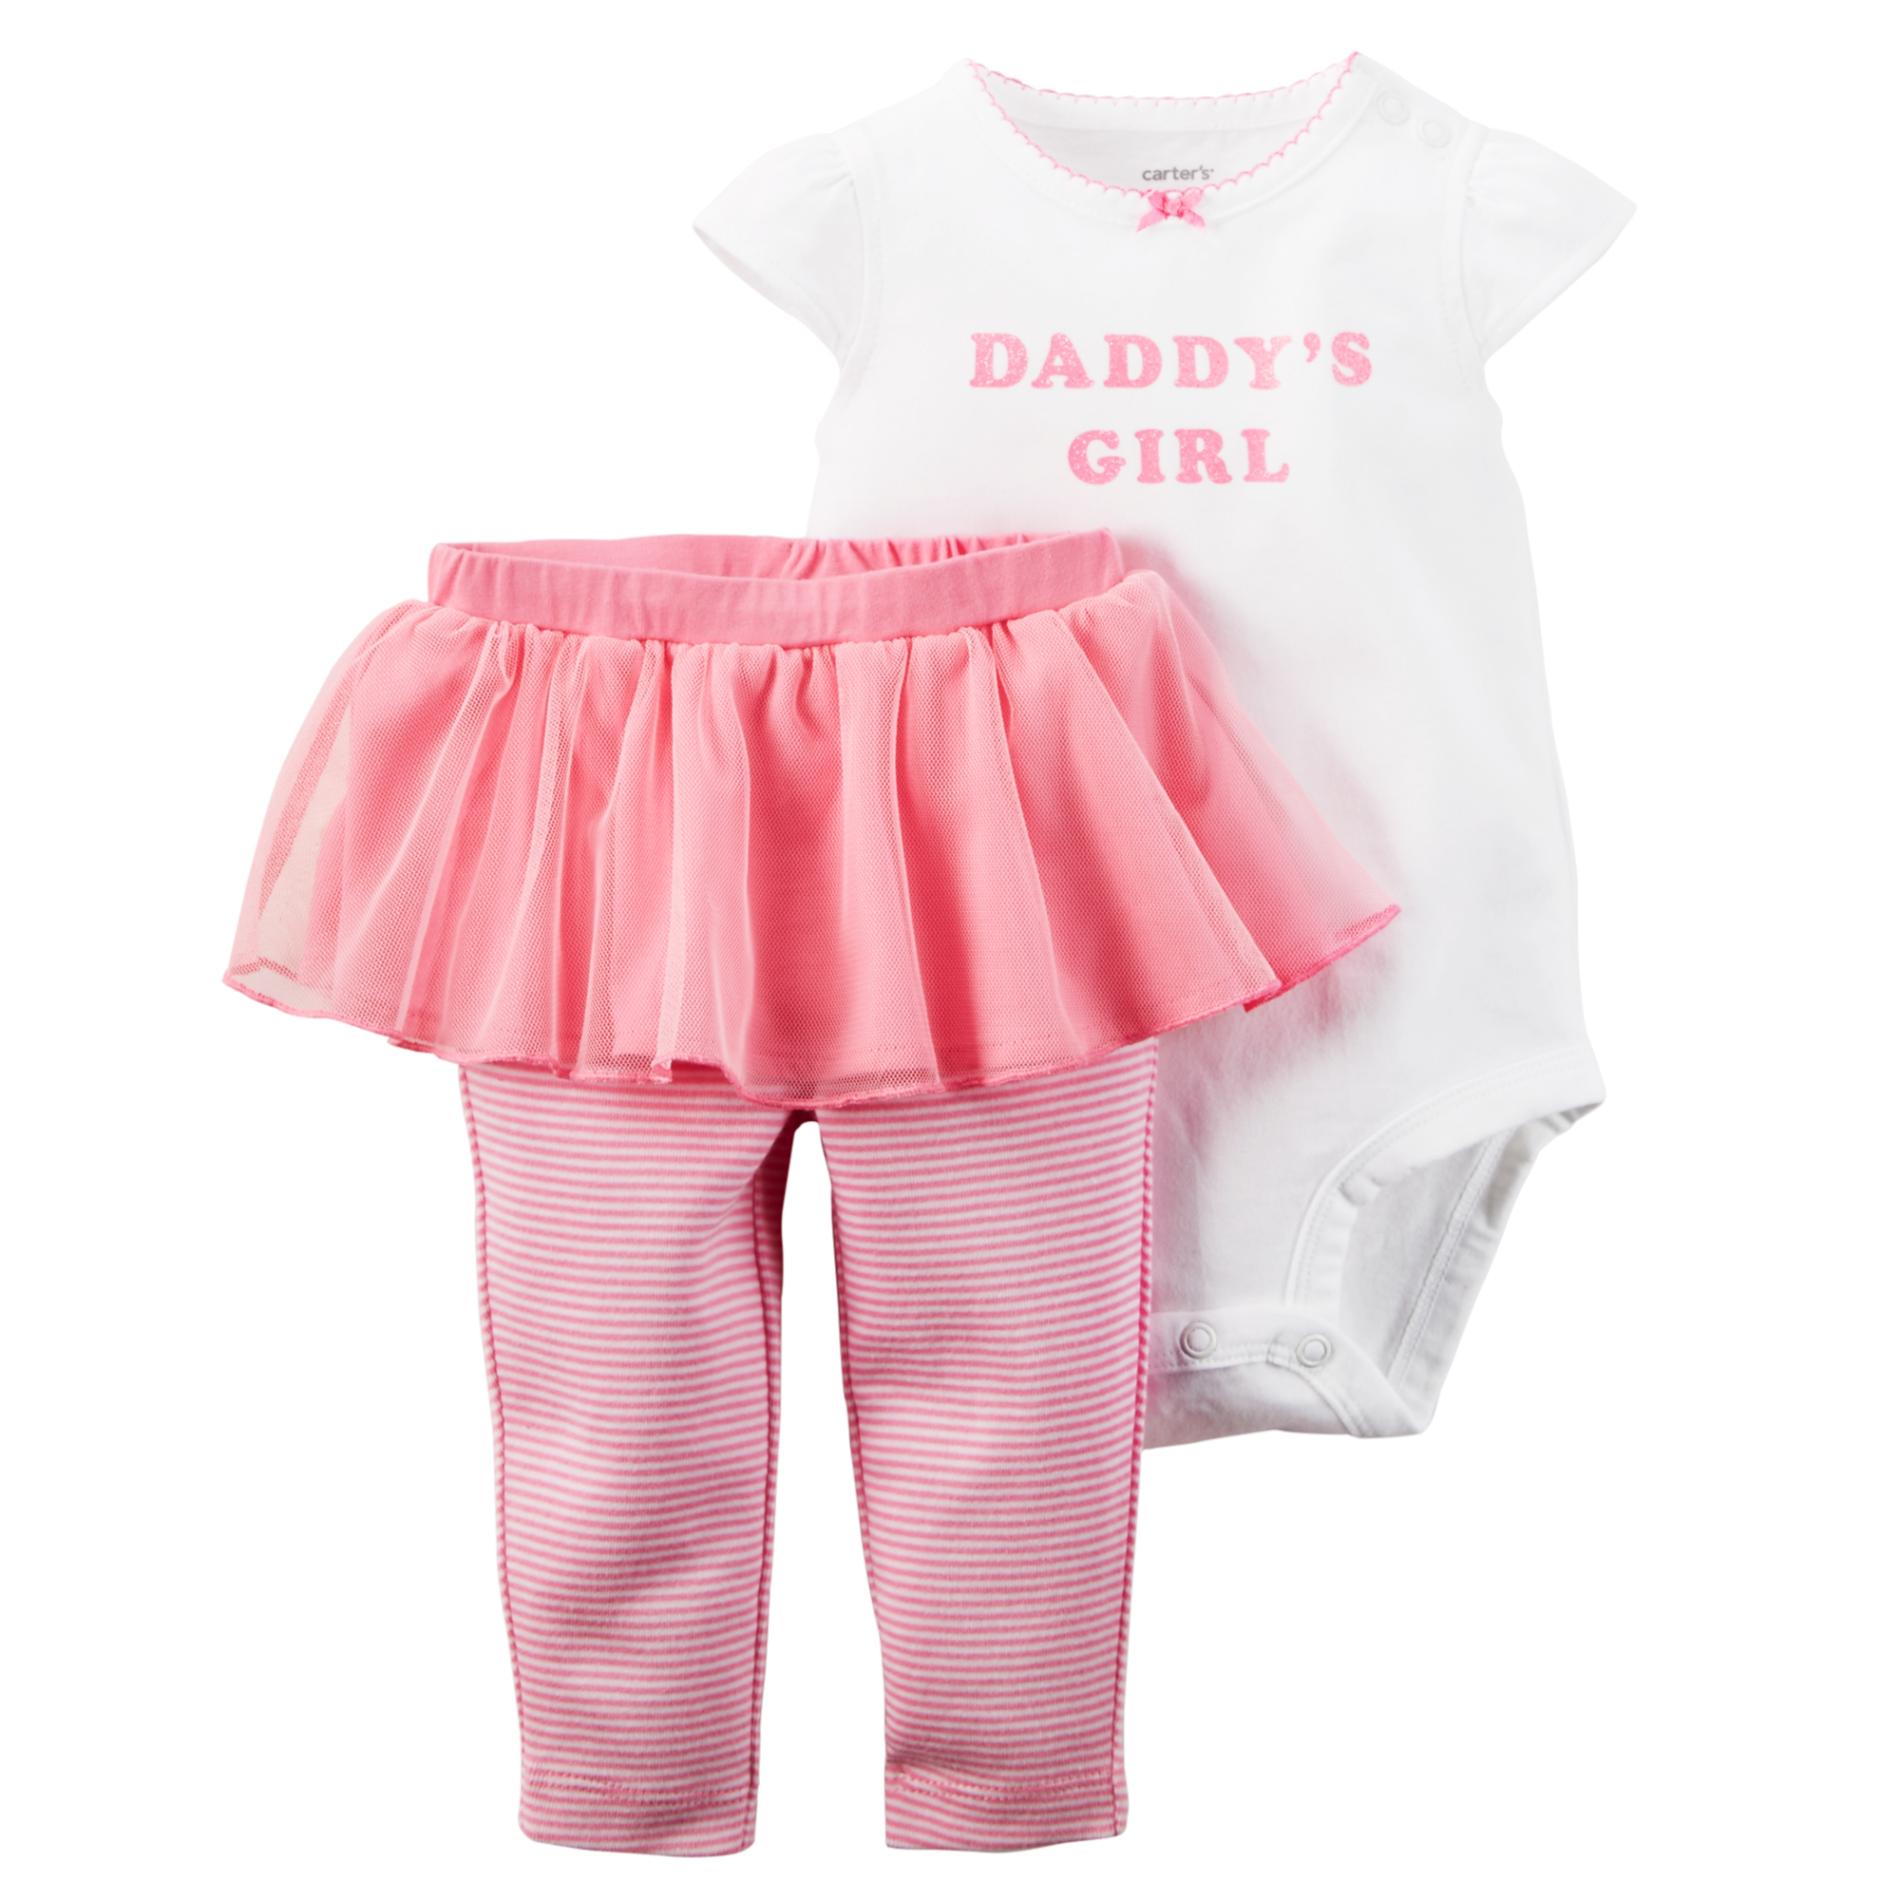 Carter's Newborn & Infant Girl's Bodysuit & Tutu Leggings - Daddy's Girl